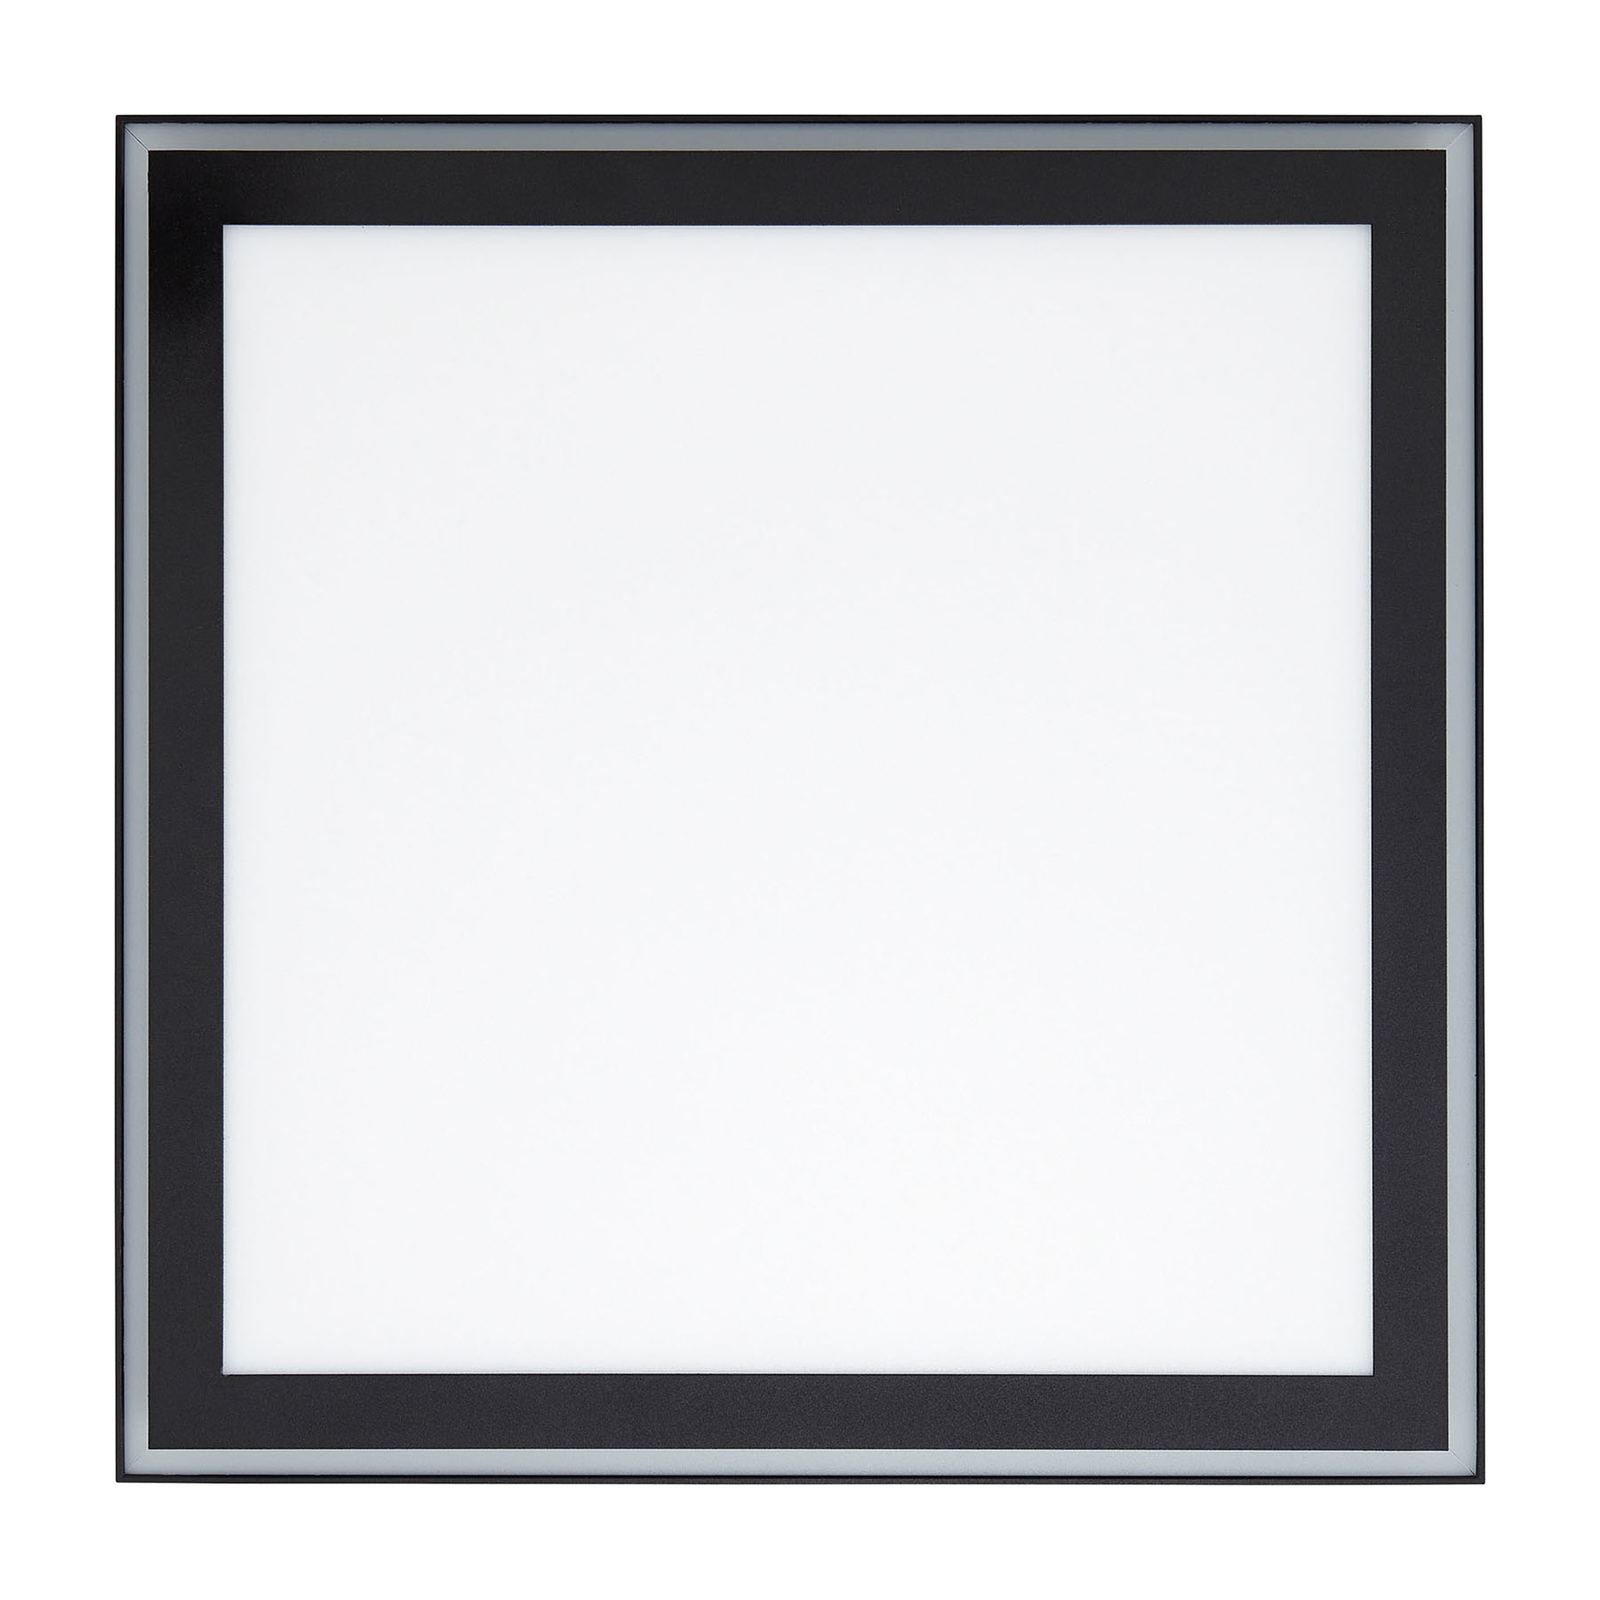 AEG Loren LED panel CCT dimmable, black 40 x 40 cm